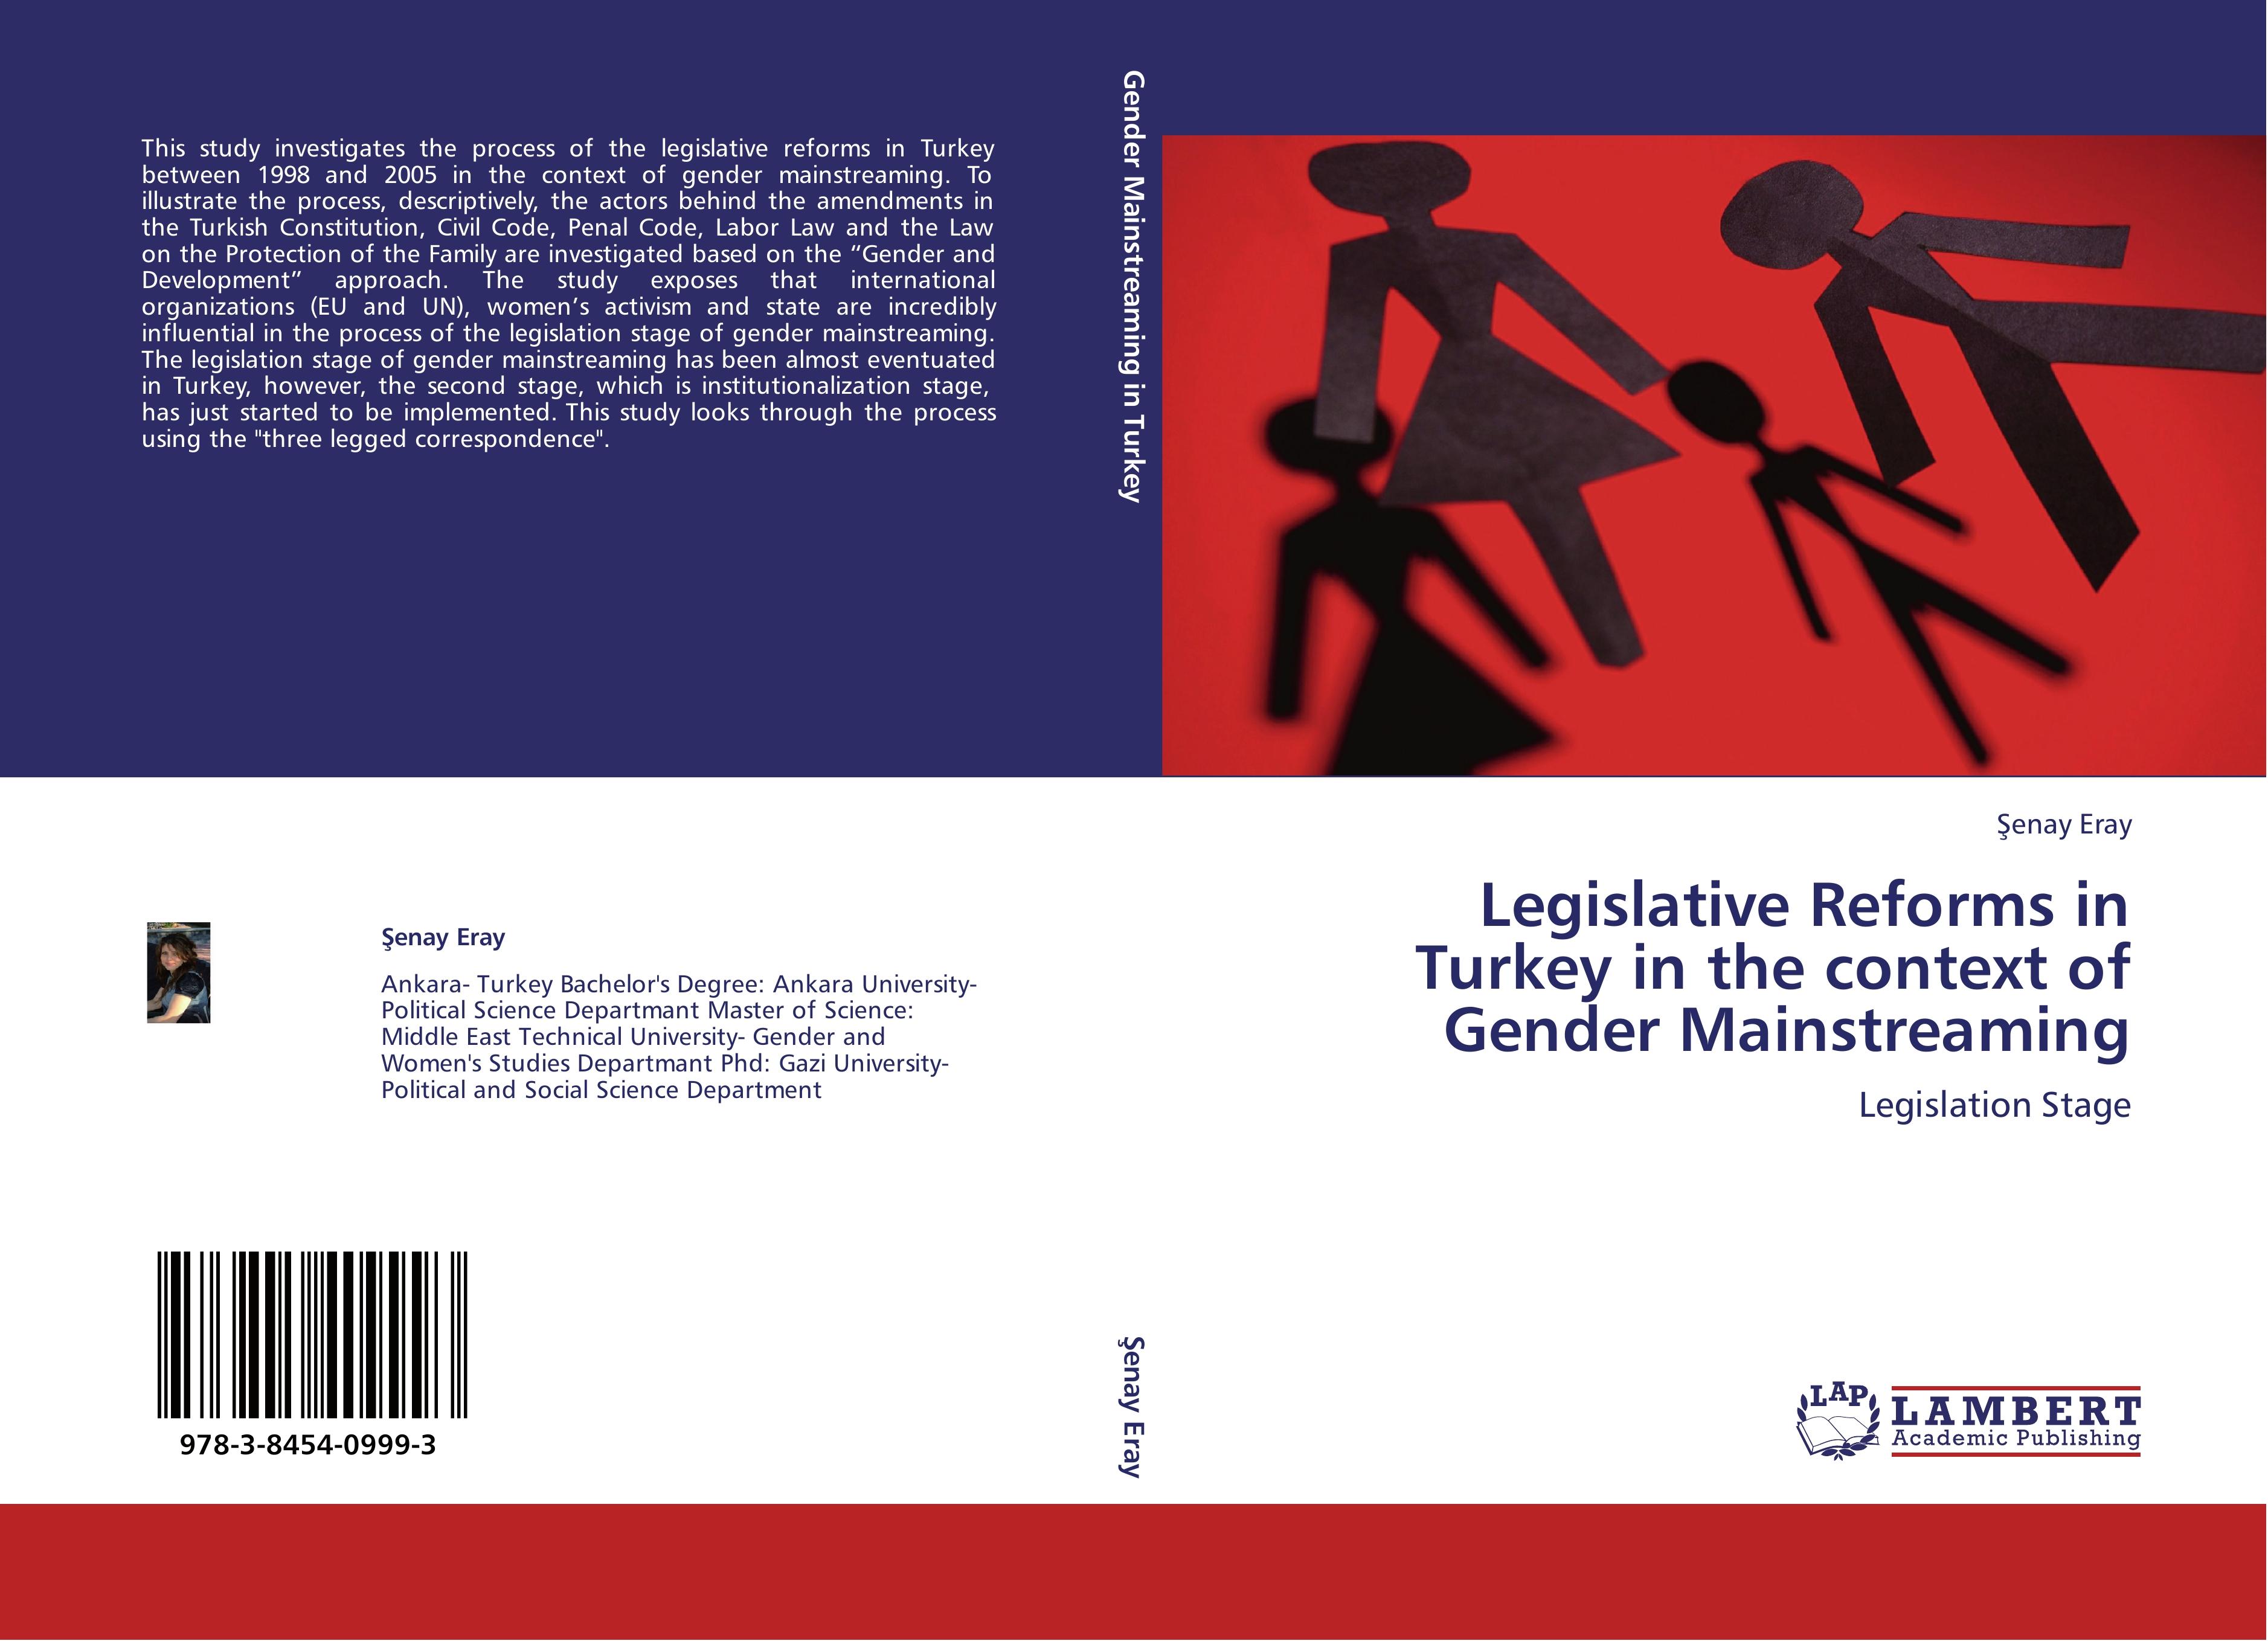 Legislative Reforms in Turkey in the context of Gender Mainstreaming - Senay Eray